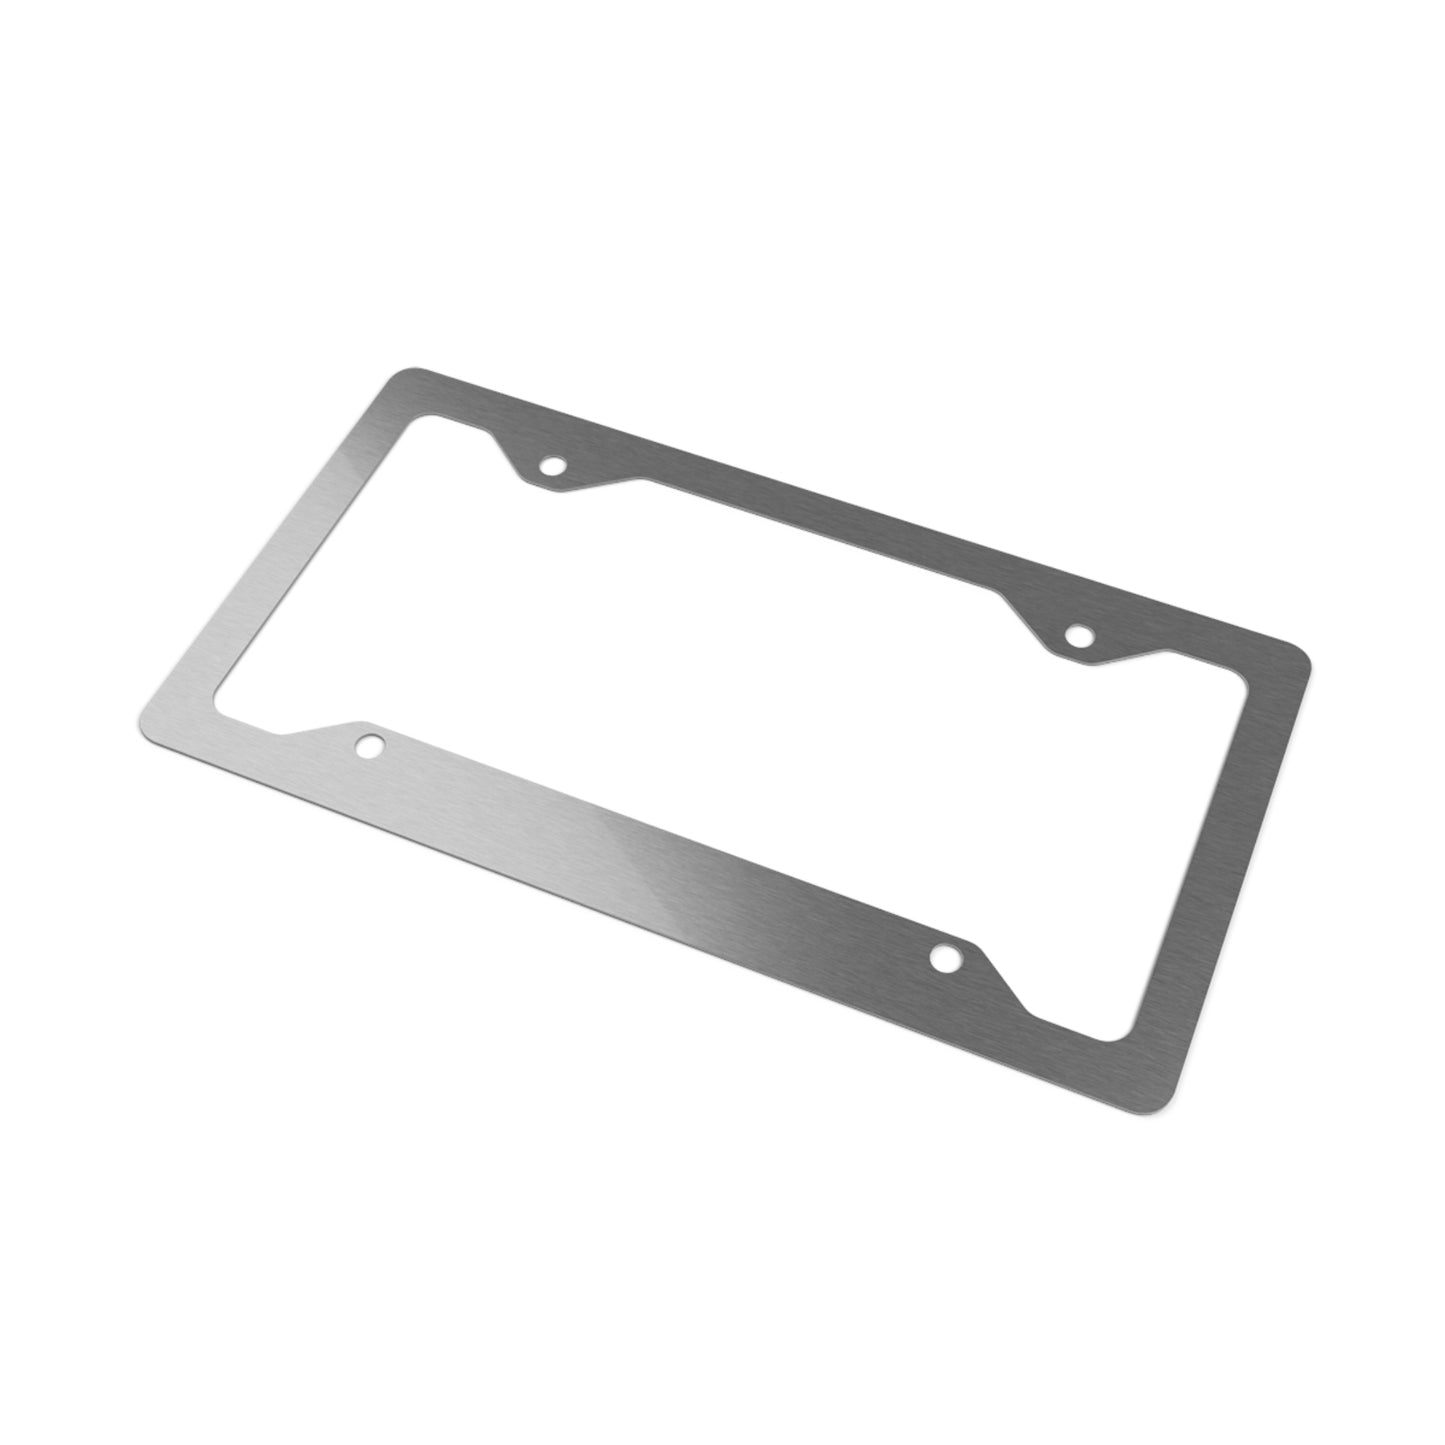 MTM Metal License Plate Frame